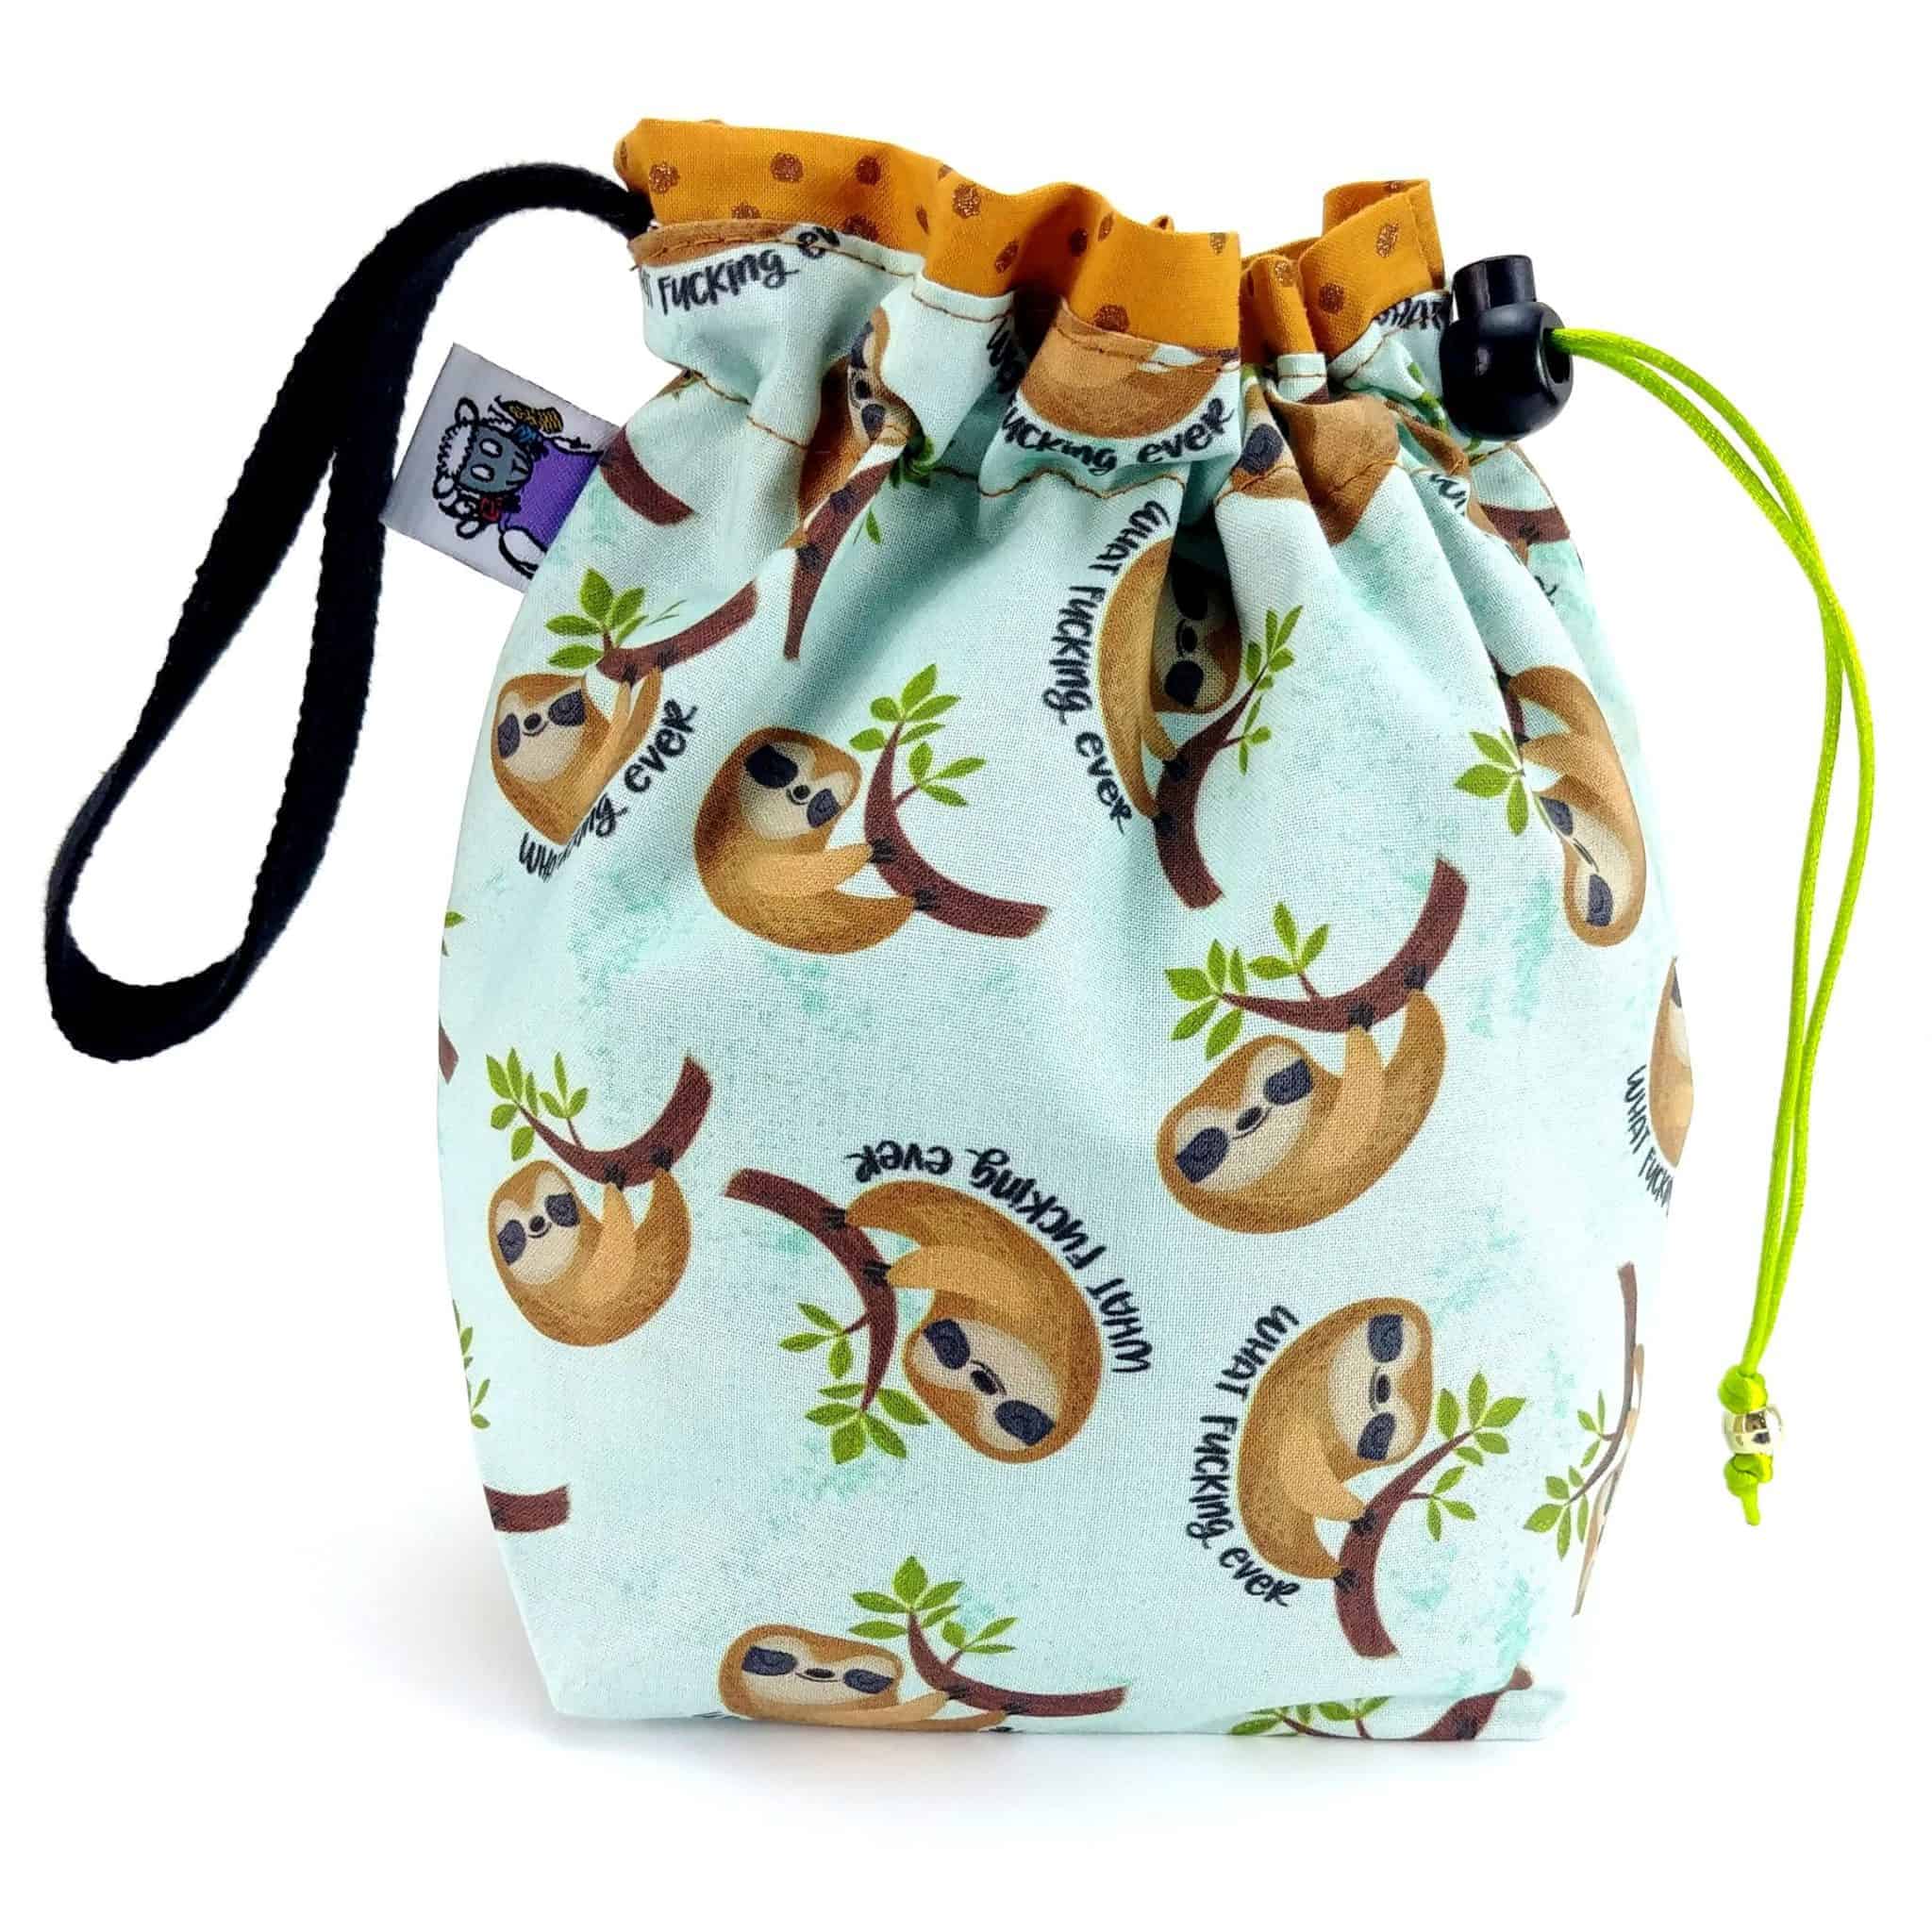 An aqua drawstring bag with cartoon sloths.